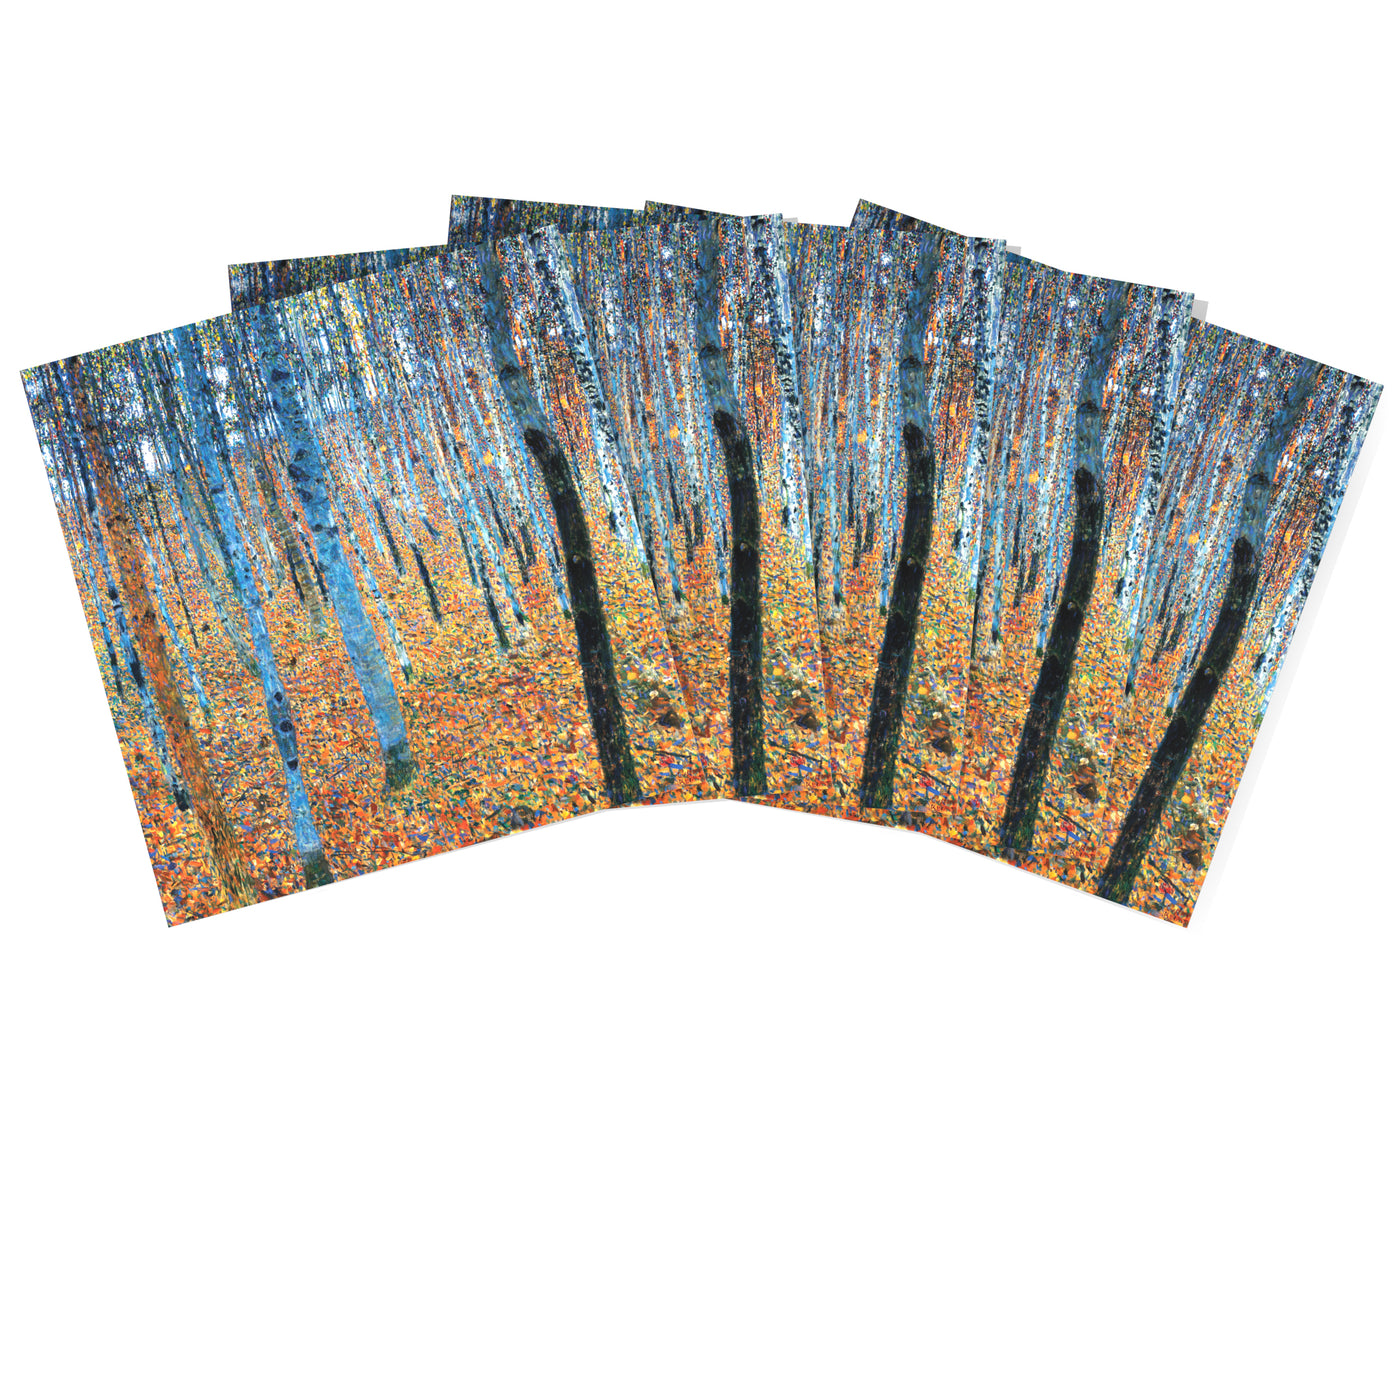 Set of 5: Zero Plastic | Gustav Klimt - 'Beech Grove I' - Plastic-Negative Art Greetings Card (15 x 15 cm - Single Design)